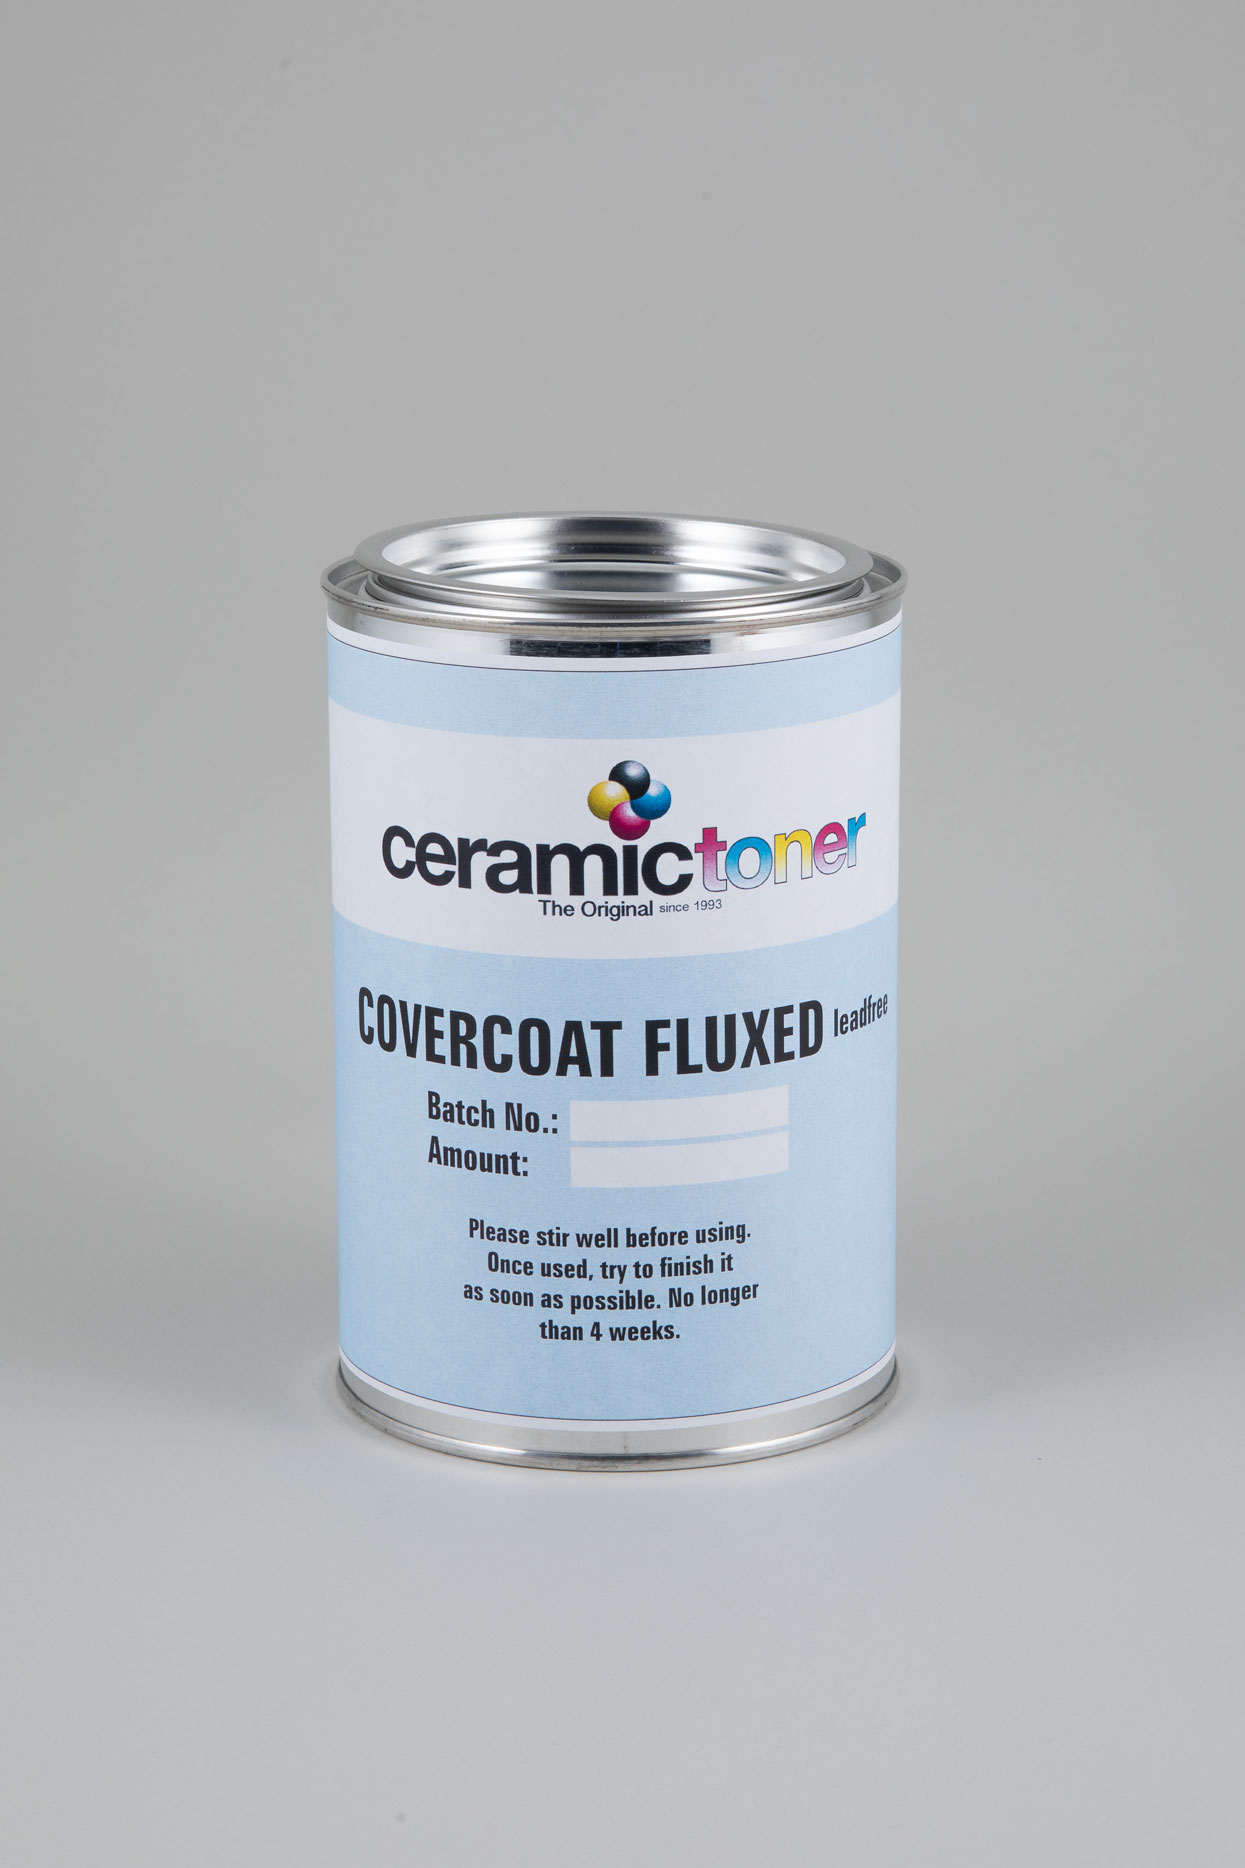 Ceramictoner 无铅釉面漆 Covercoat Fluxed Leadfree 采用罐装形式，适用于所有应用领域。涂层是浅蓝色的。